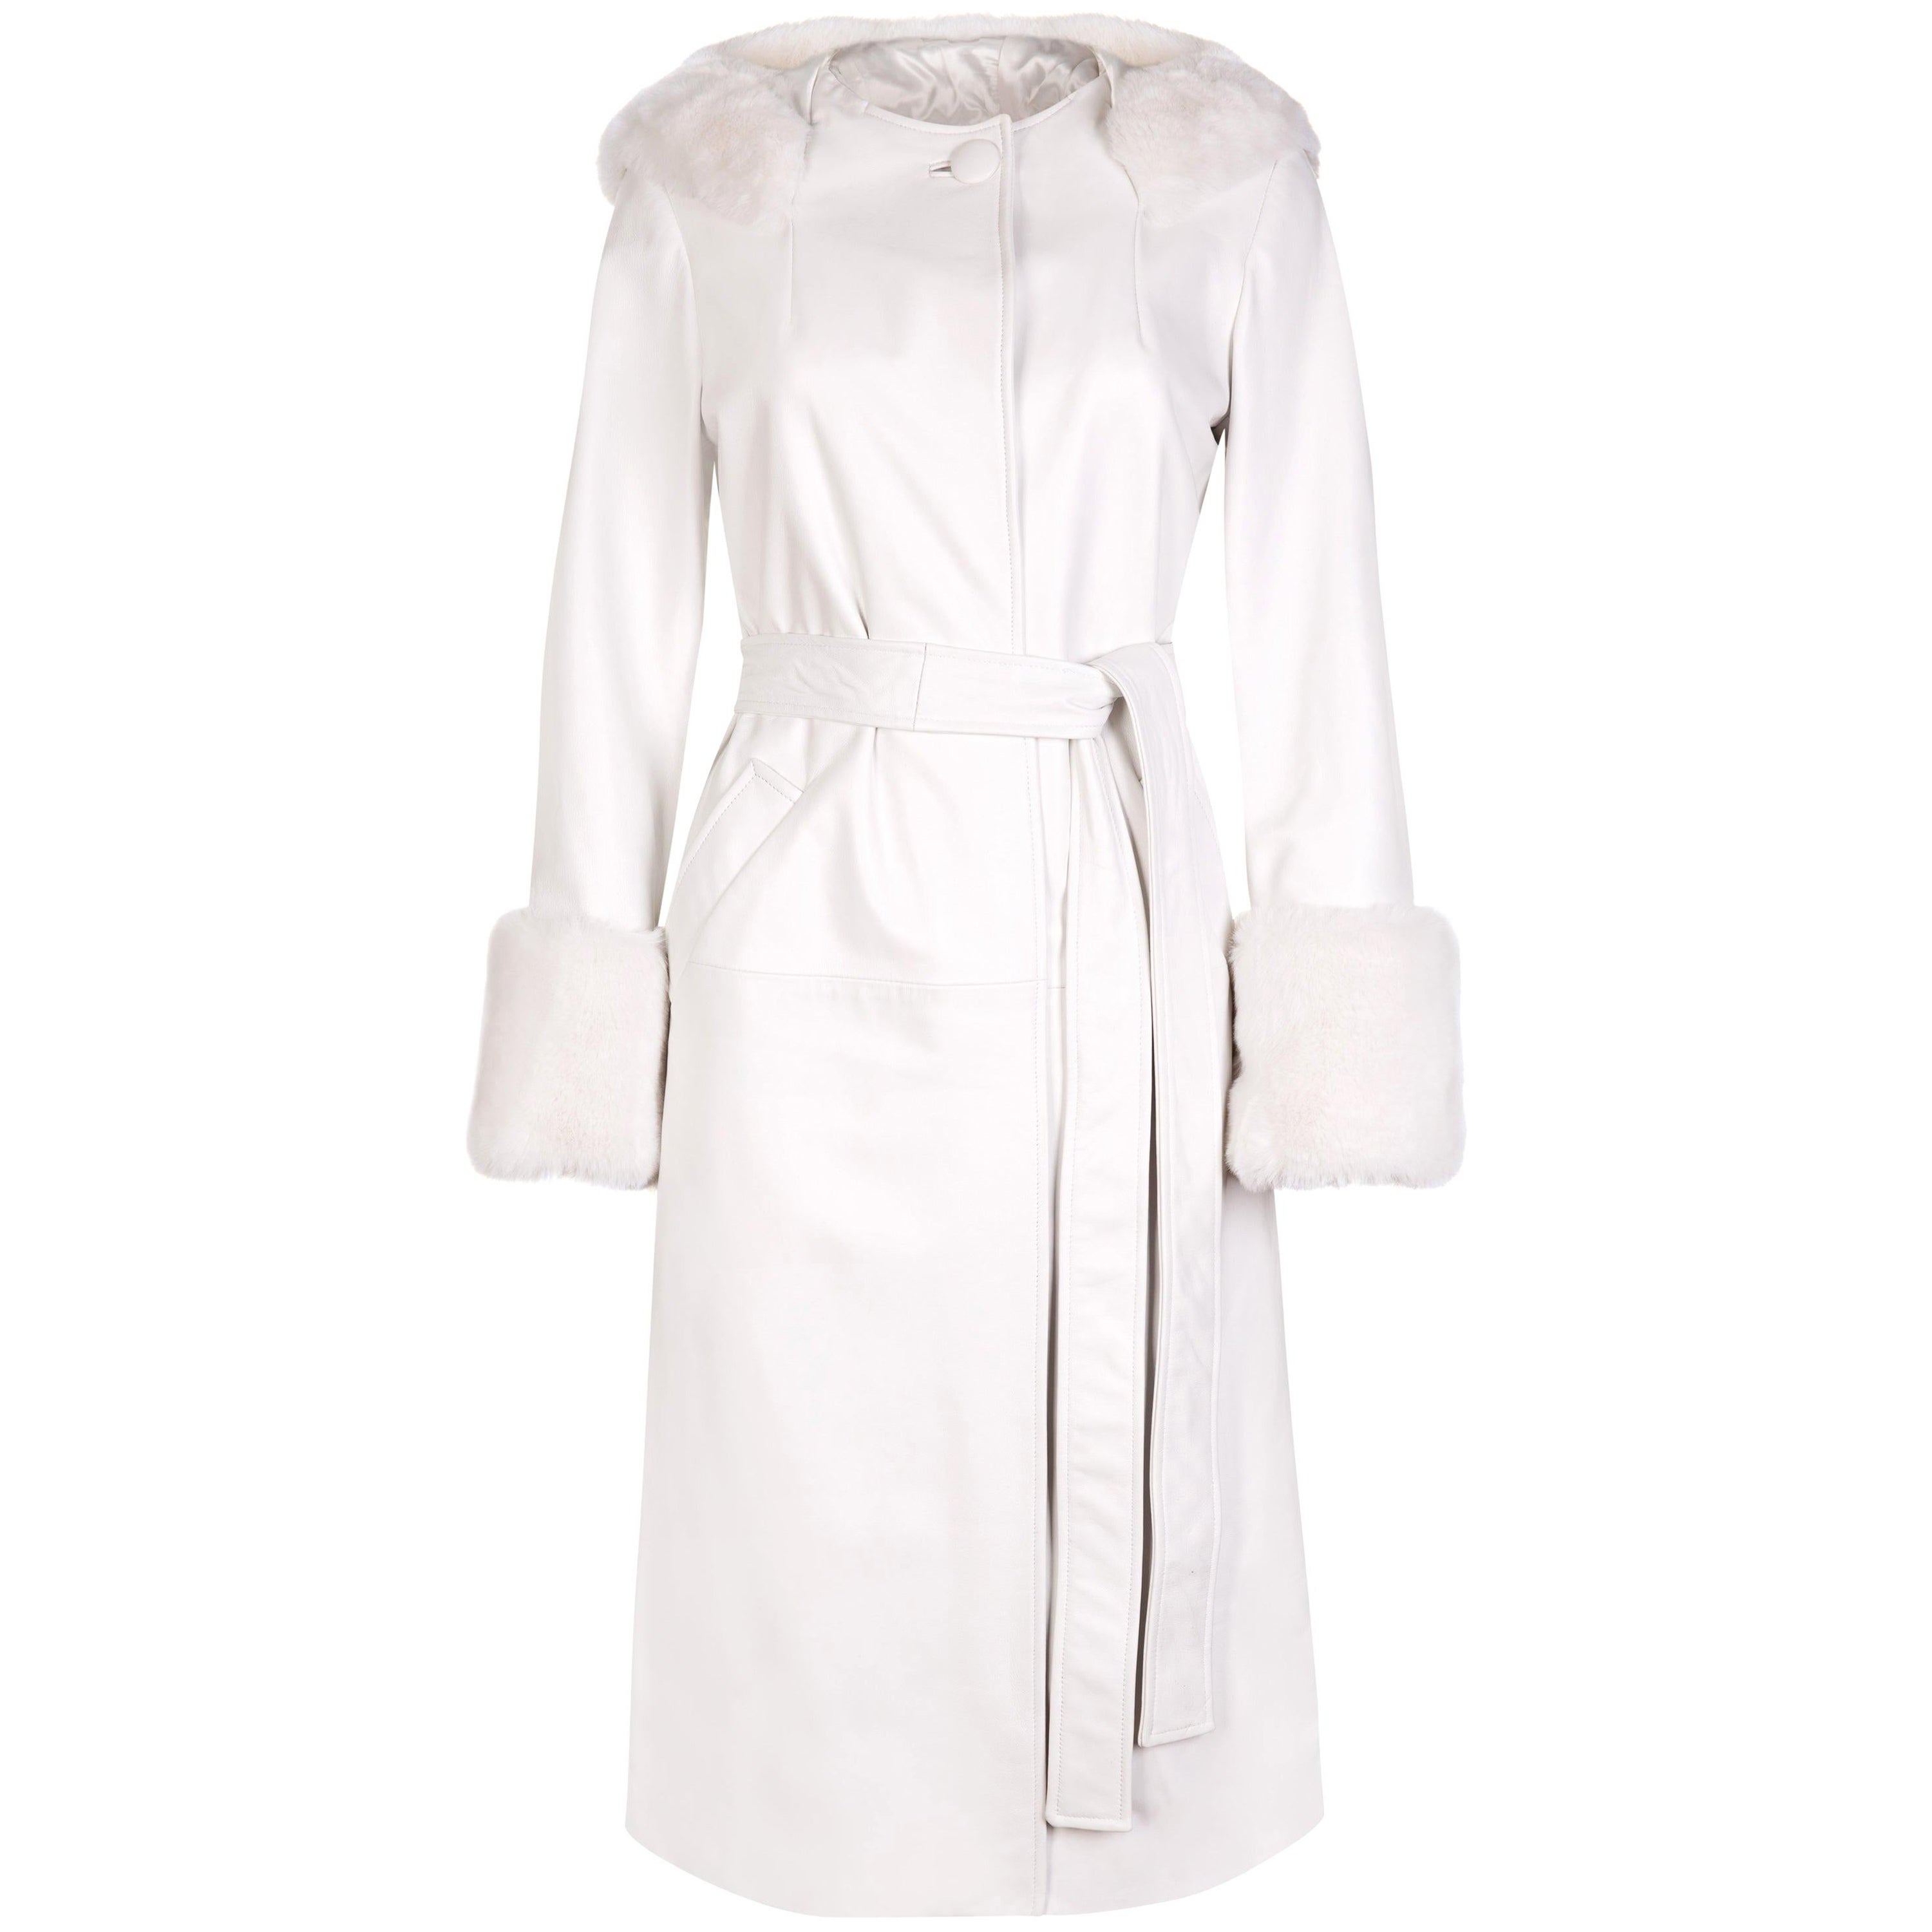 Trench-coat Aurora en cuir blanc avec fausse fourrure Verheyen, Taille UK 10